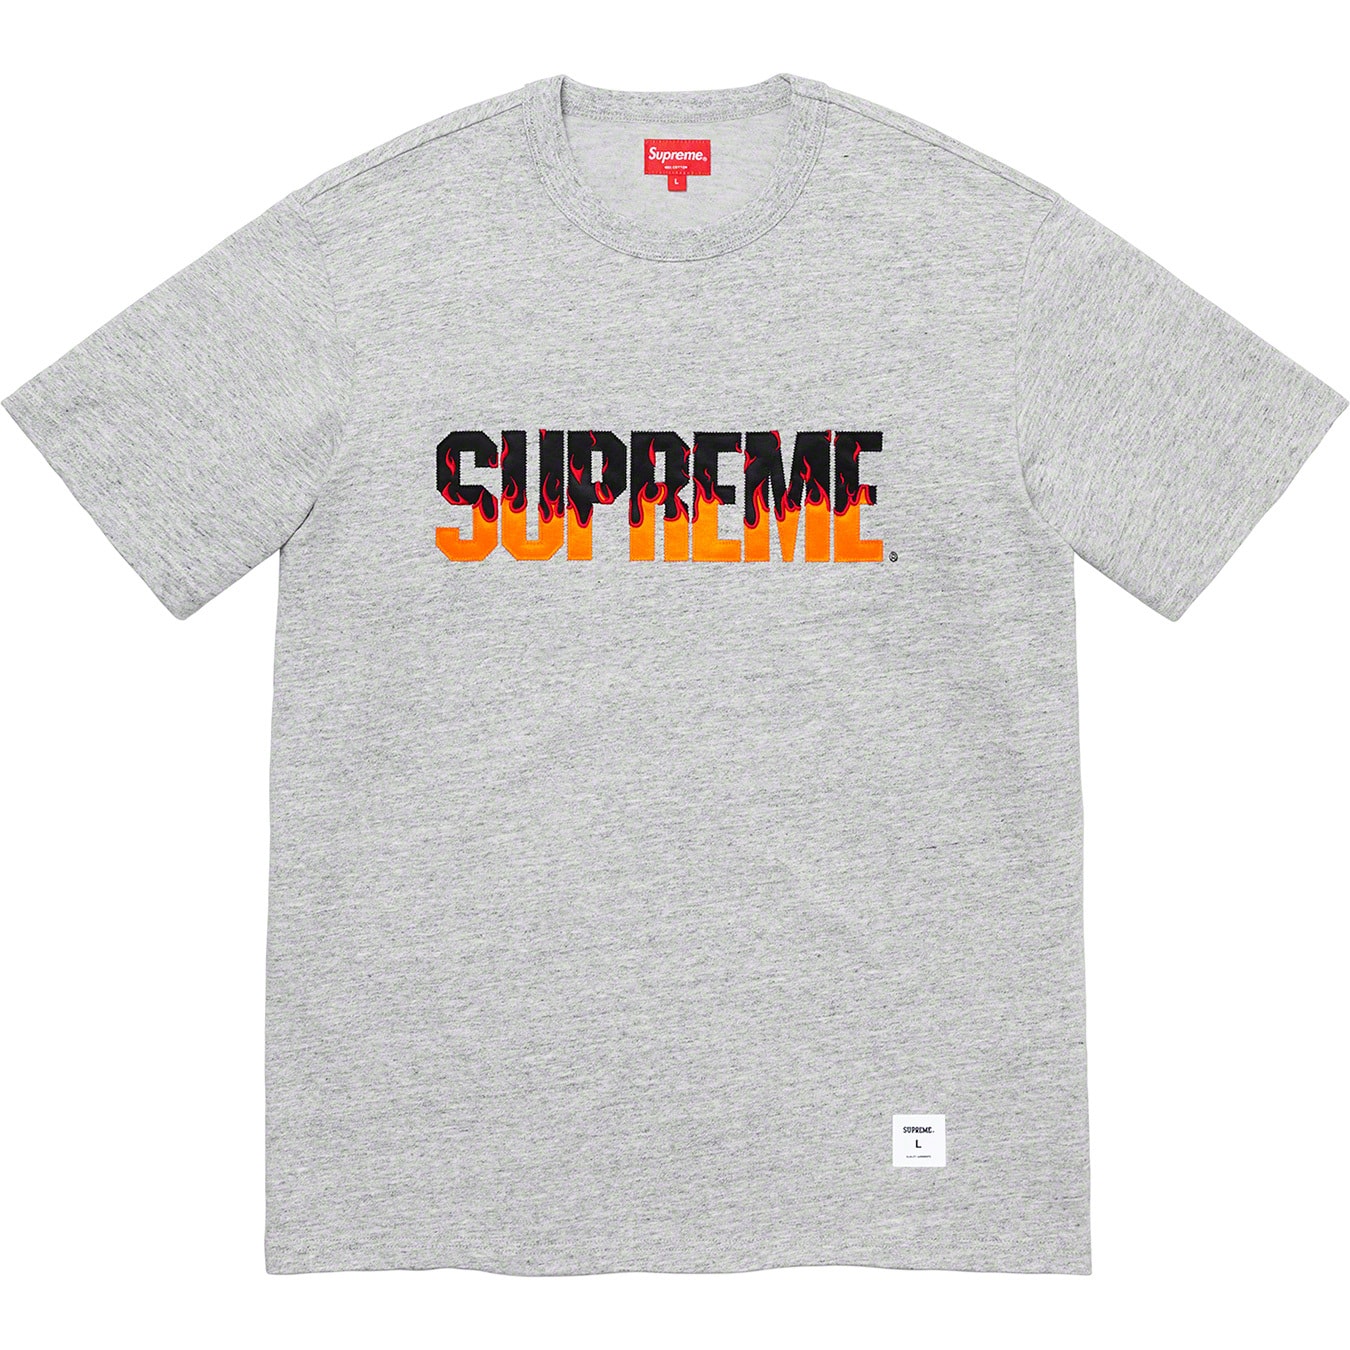 Supreme Flame S/S Top